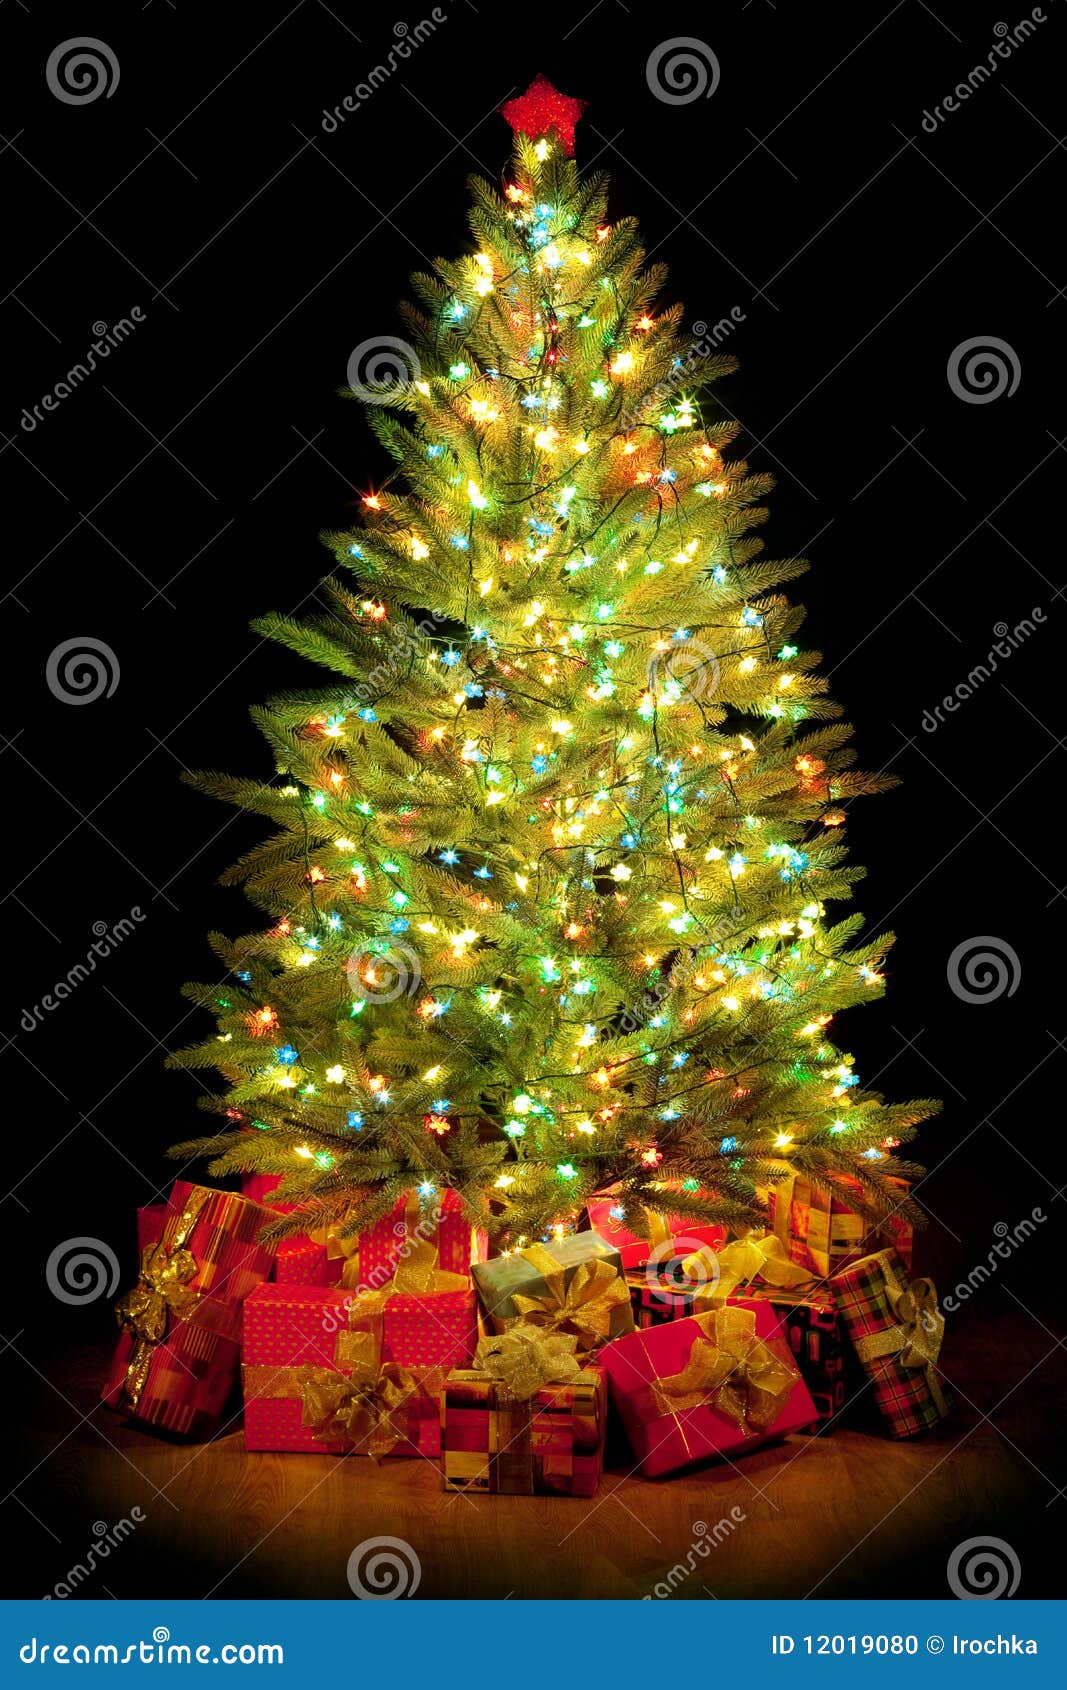 presents around christmas tree